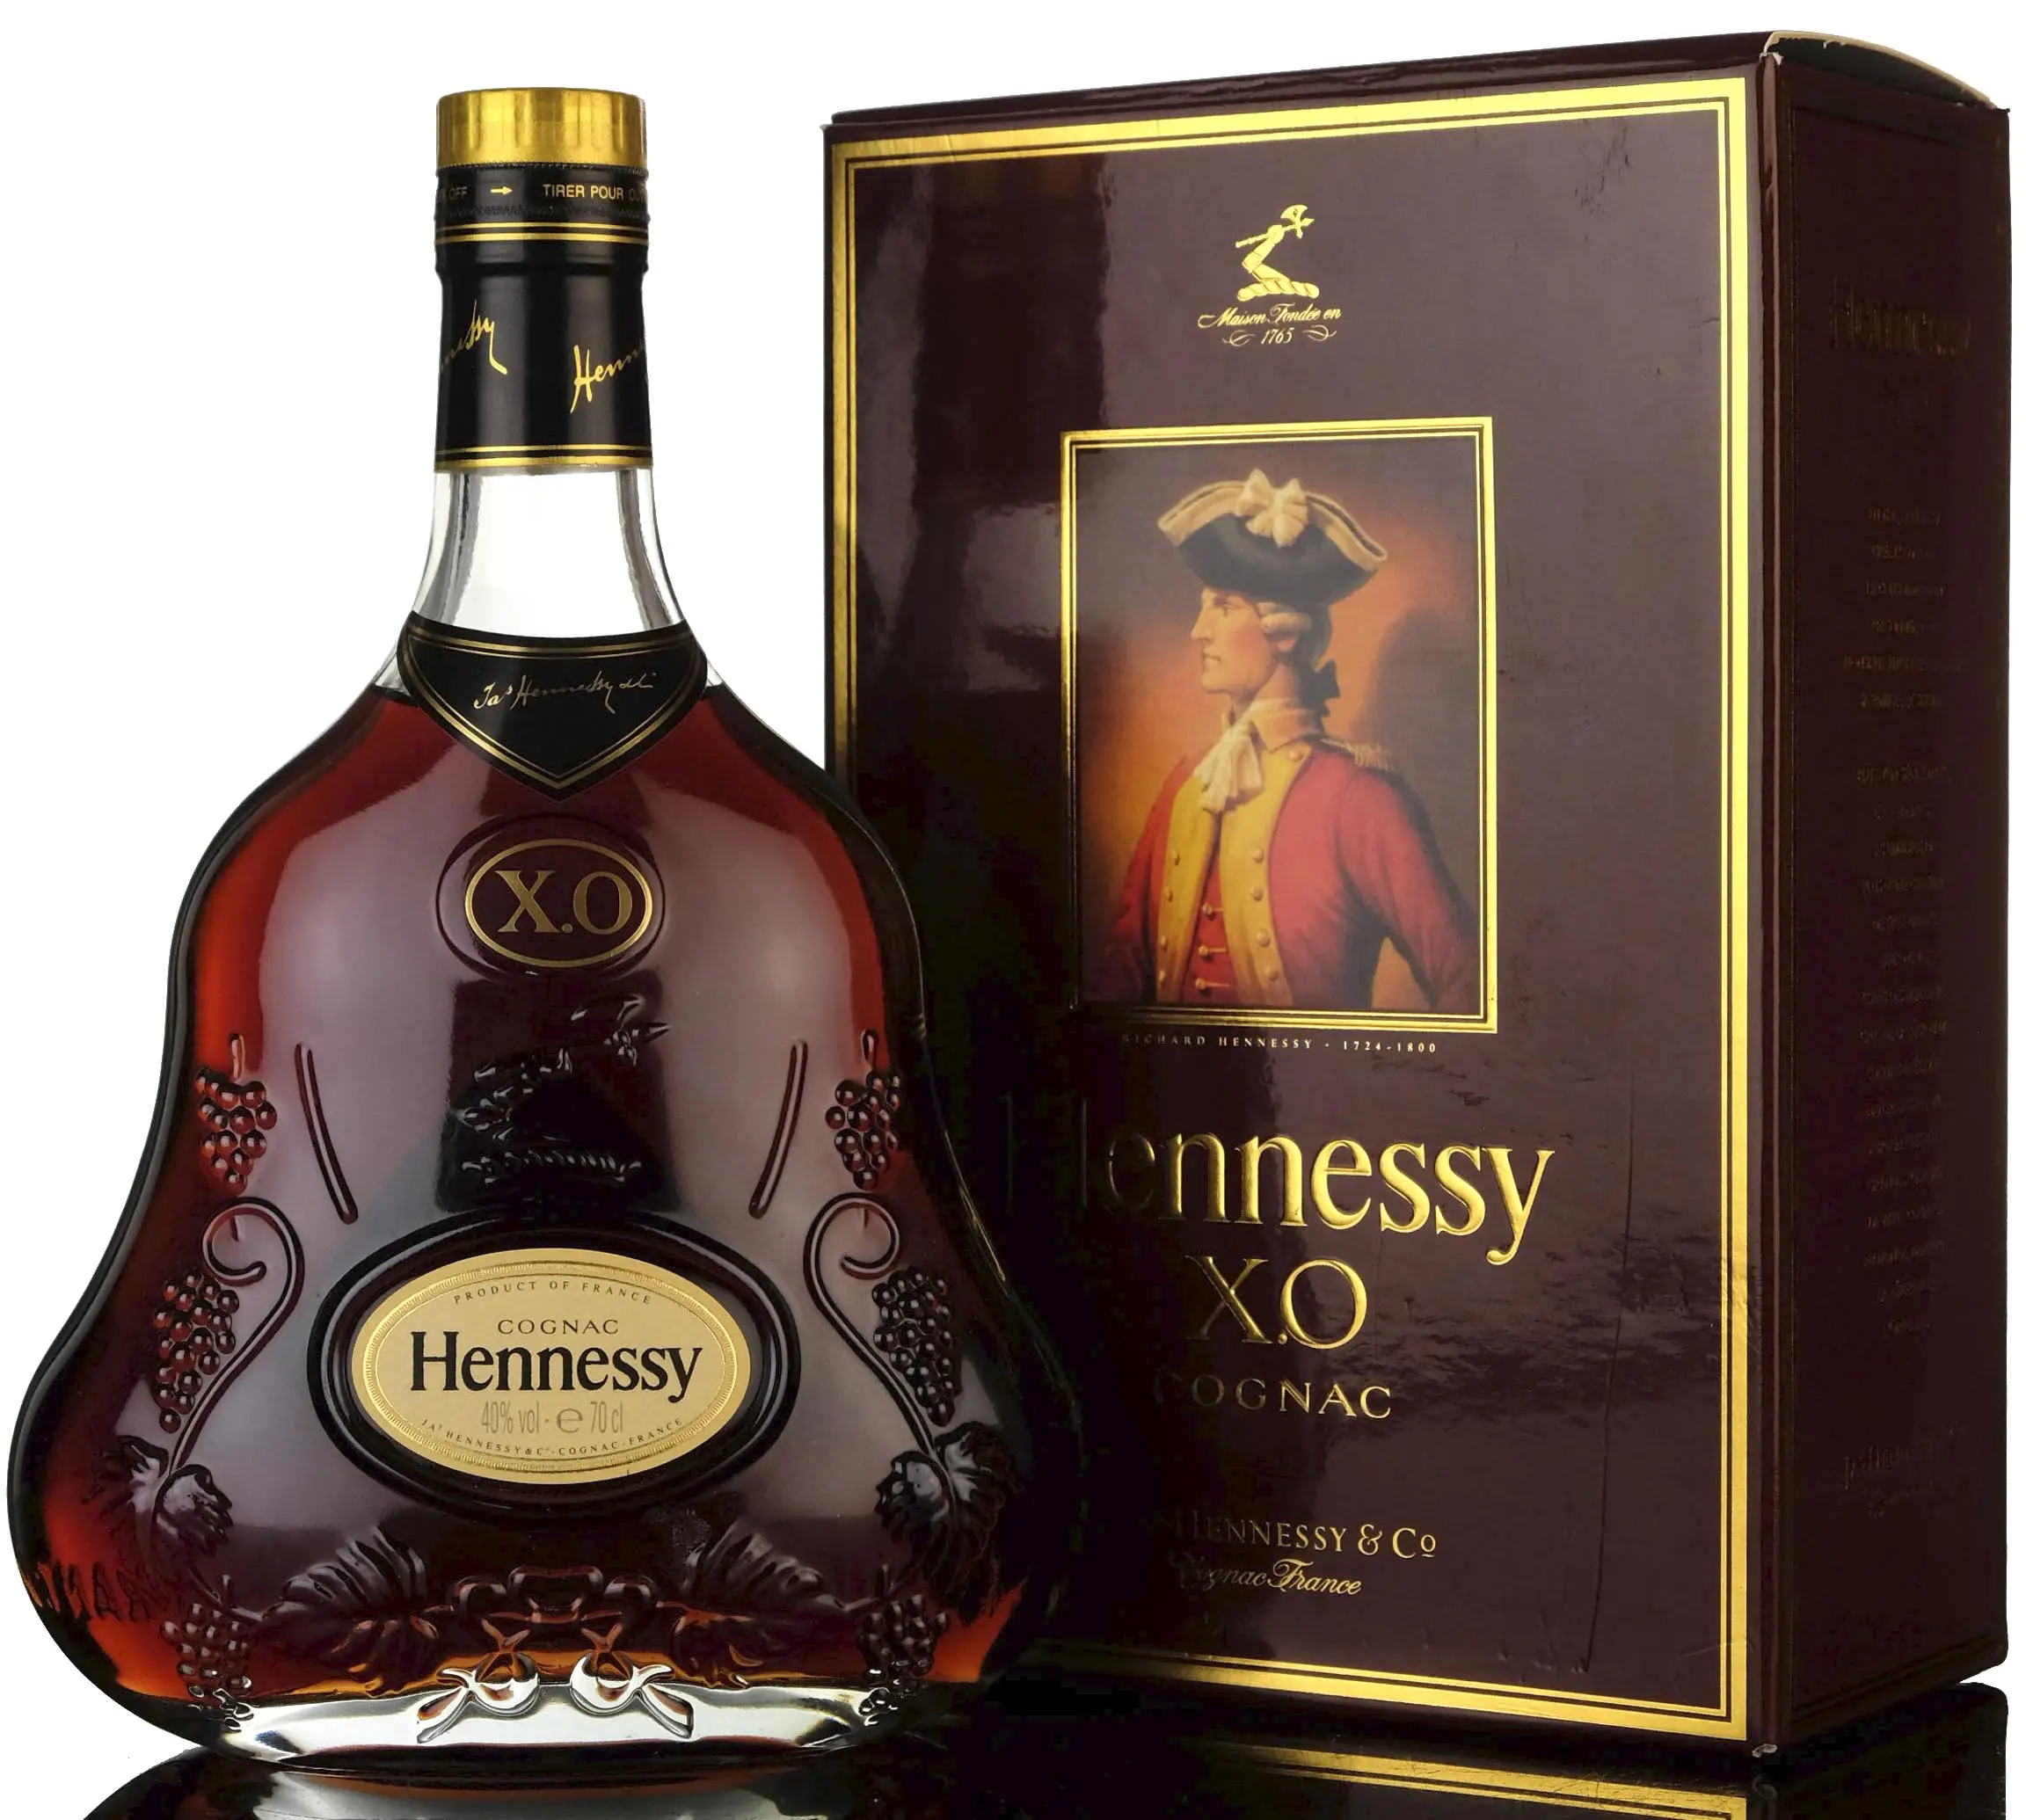 Hennessy cognac цена. Коньяк Hennessy XO Cognac. Хеннесси Хо 0.5 Cognac. Hennessy Cognac 0.5 Хо. Коньяк Hennessy 0.5 Cognac.